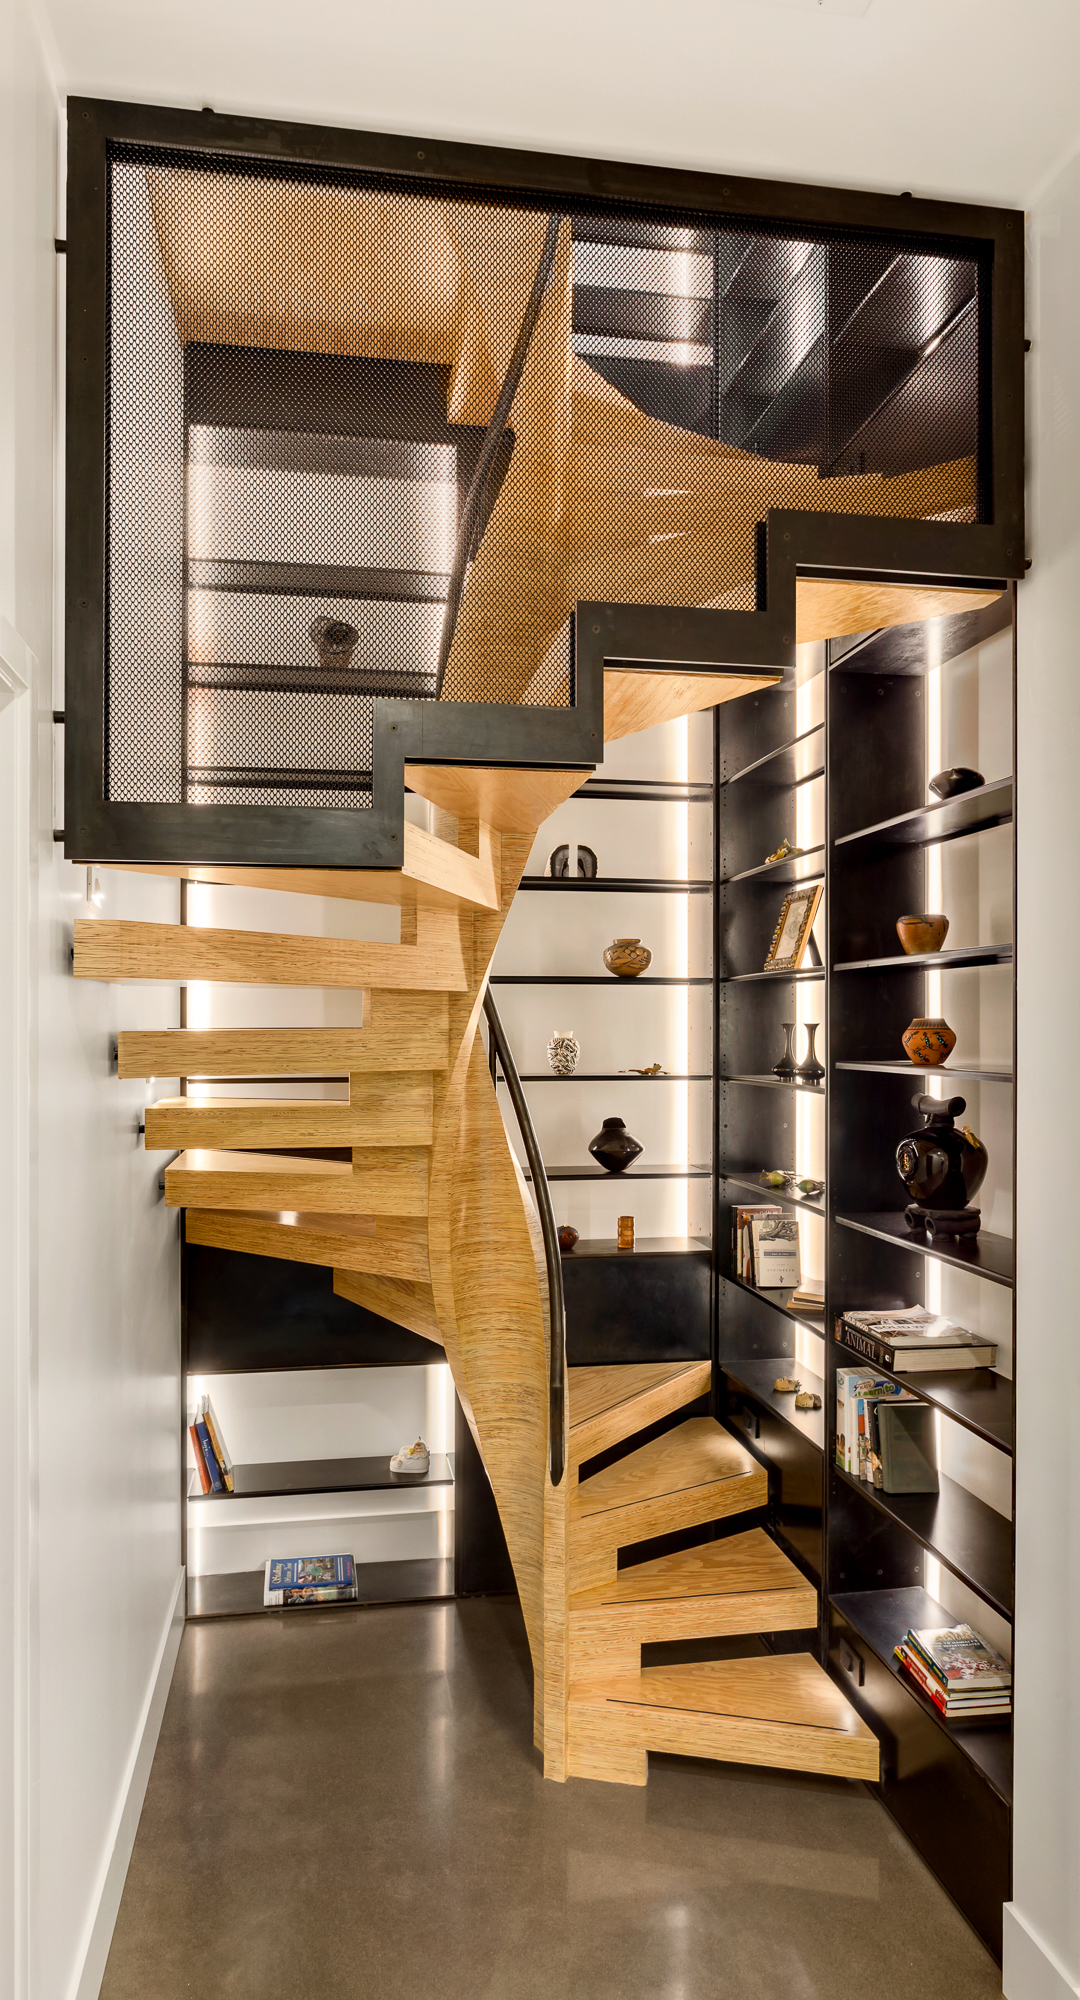 mw design workshop spiral staircase MPP plywood CNC